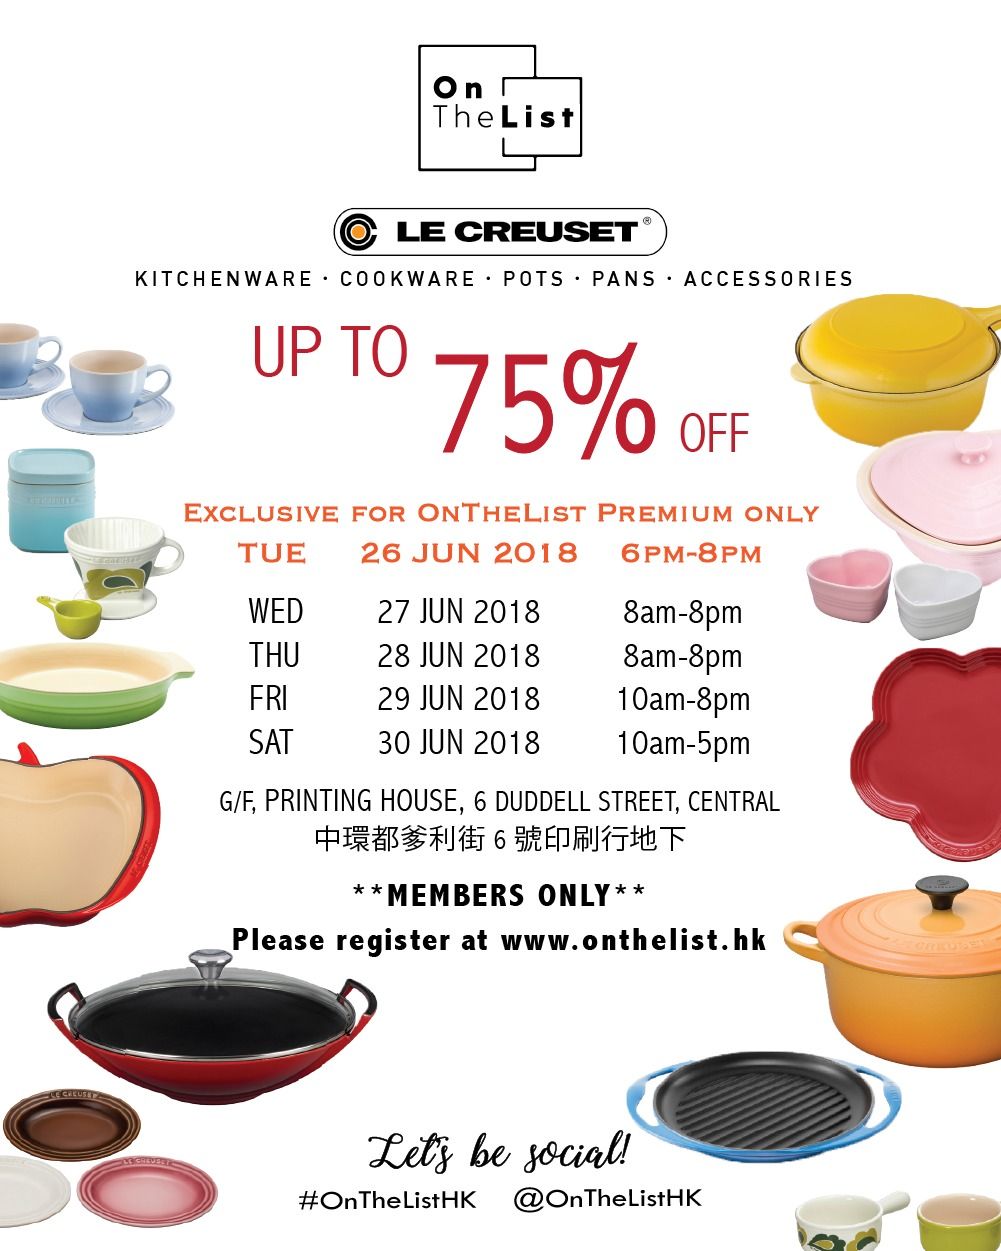 Secret Dealz Hong Kong: LE CREUSET cookware & bakeware warehouse sale at up to 75% off (June 27 2018) Central, Hong Kong